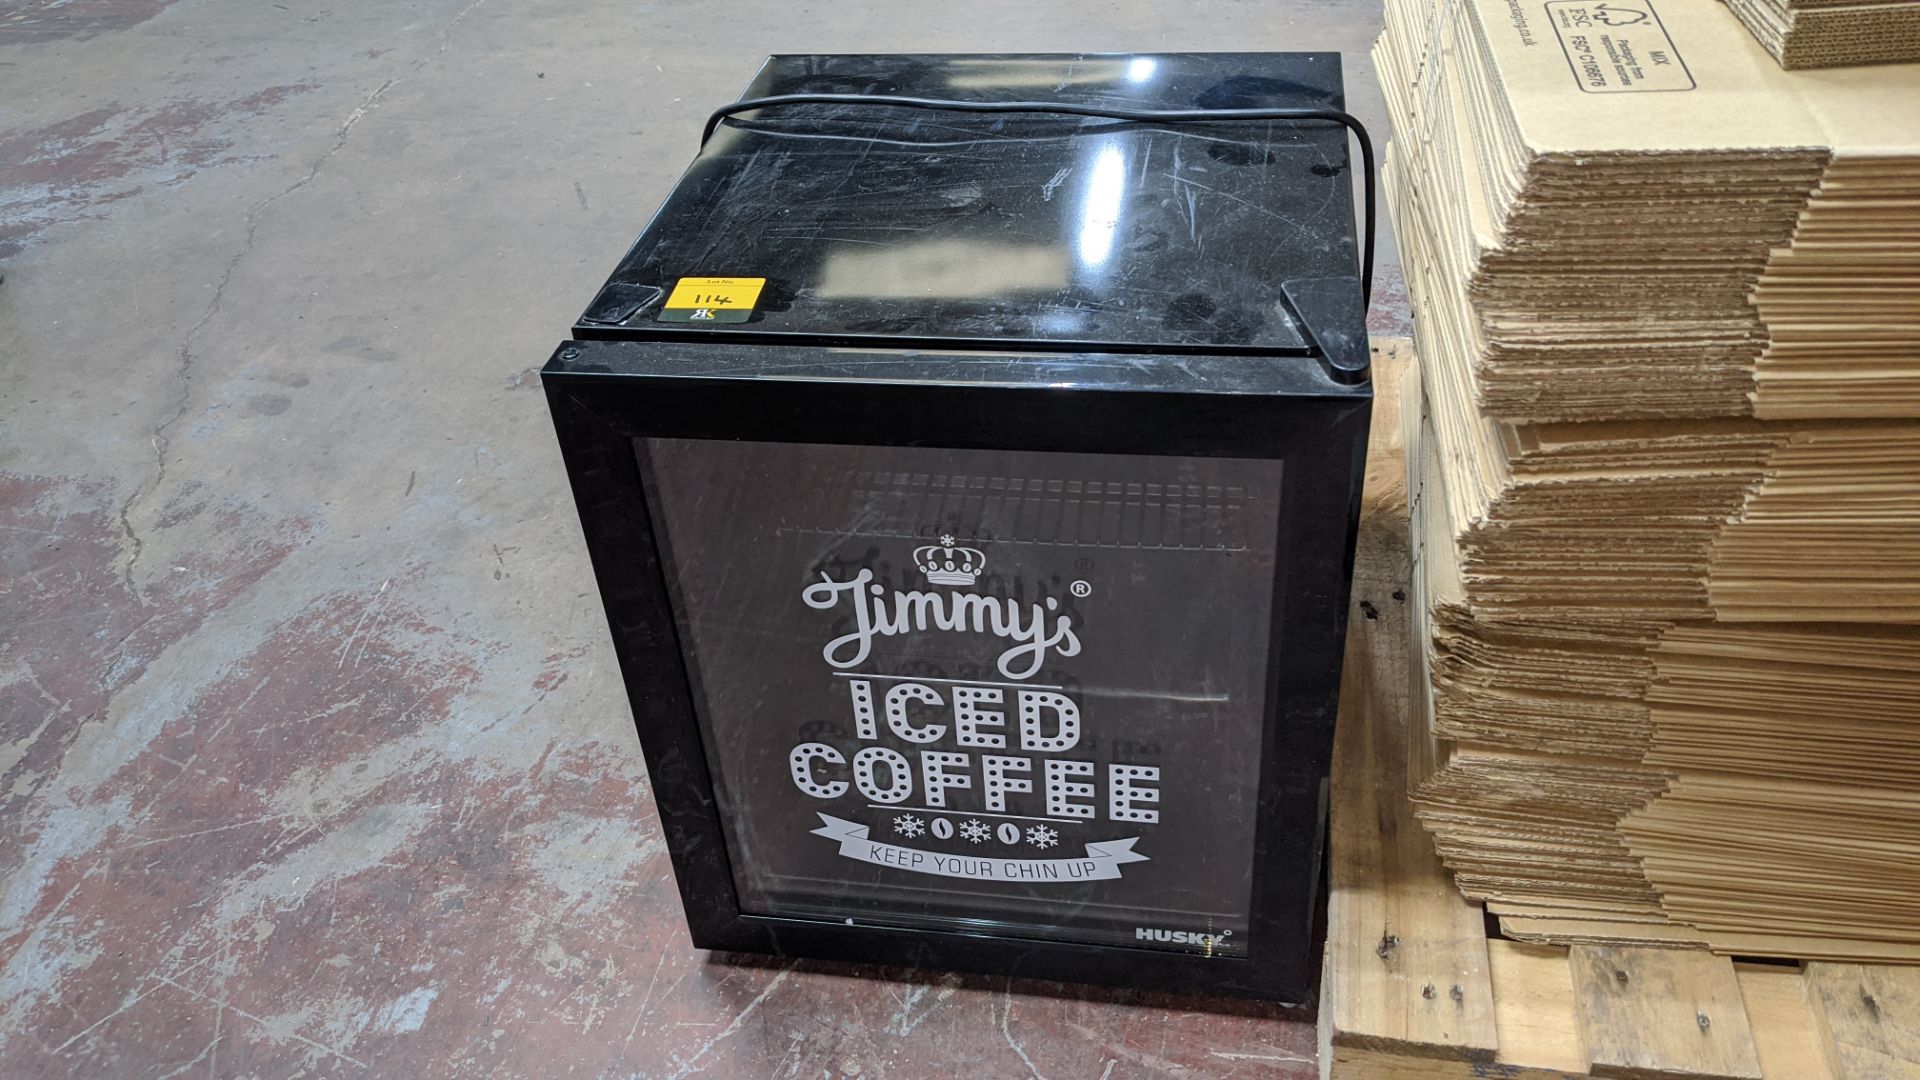 Black desktop drinks fridge branded "Jimmy's Iced Coffee"Lots 101 - 285 Are being sold on behalf - Image 2 of 5